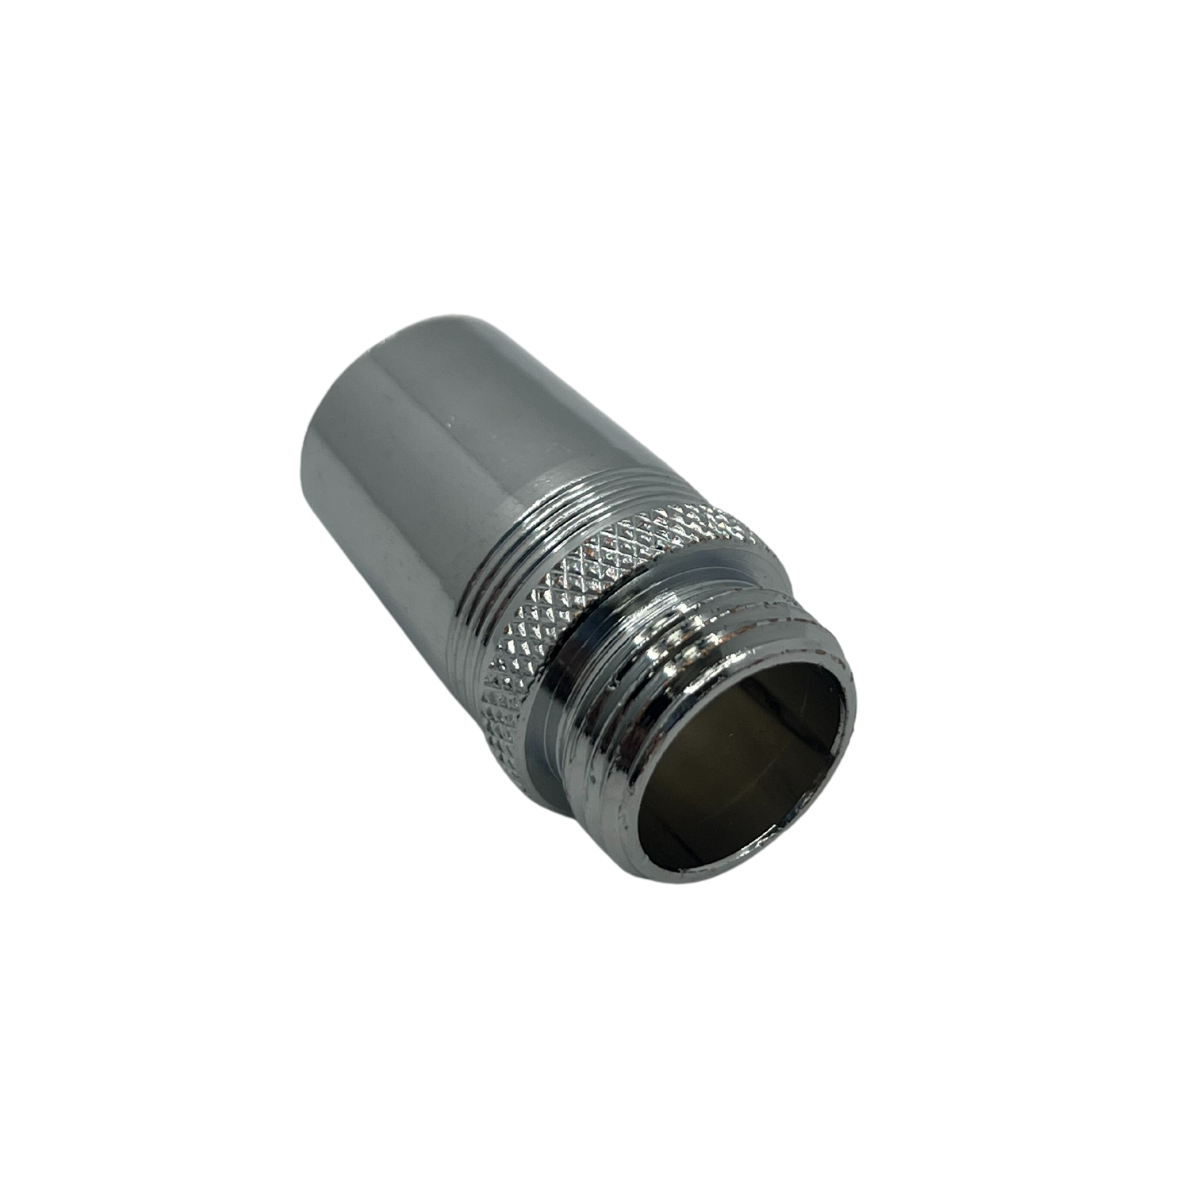 Miller Standard Nozzle for Spoolmate 100/200/3035 - 186405